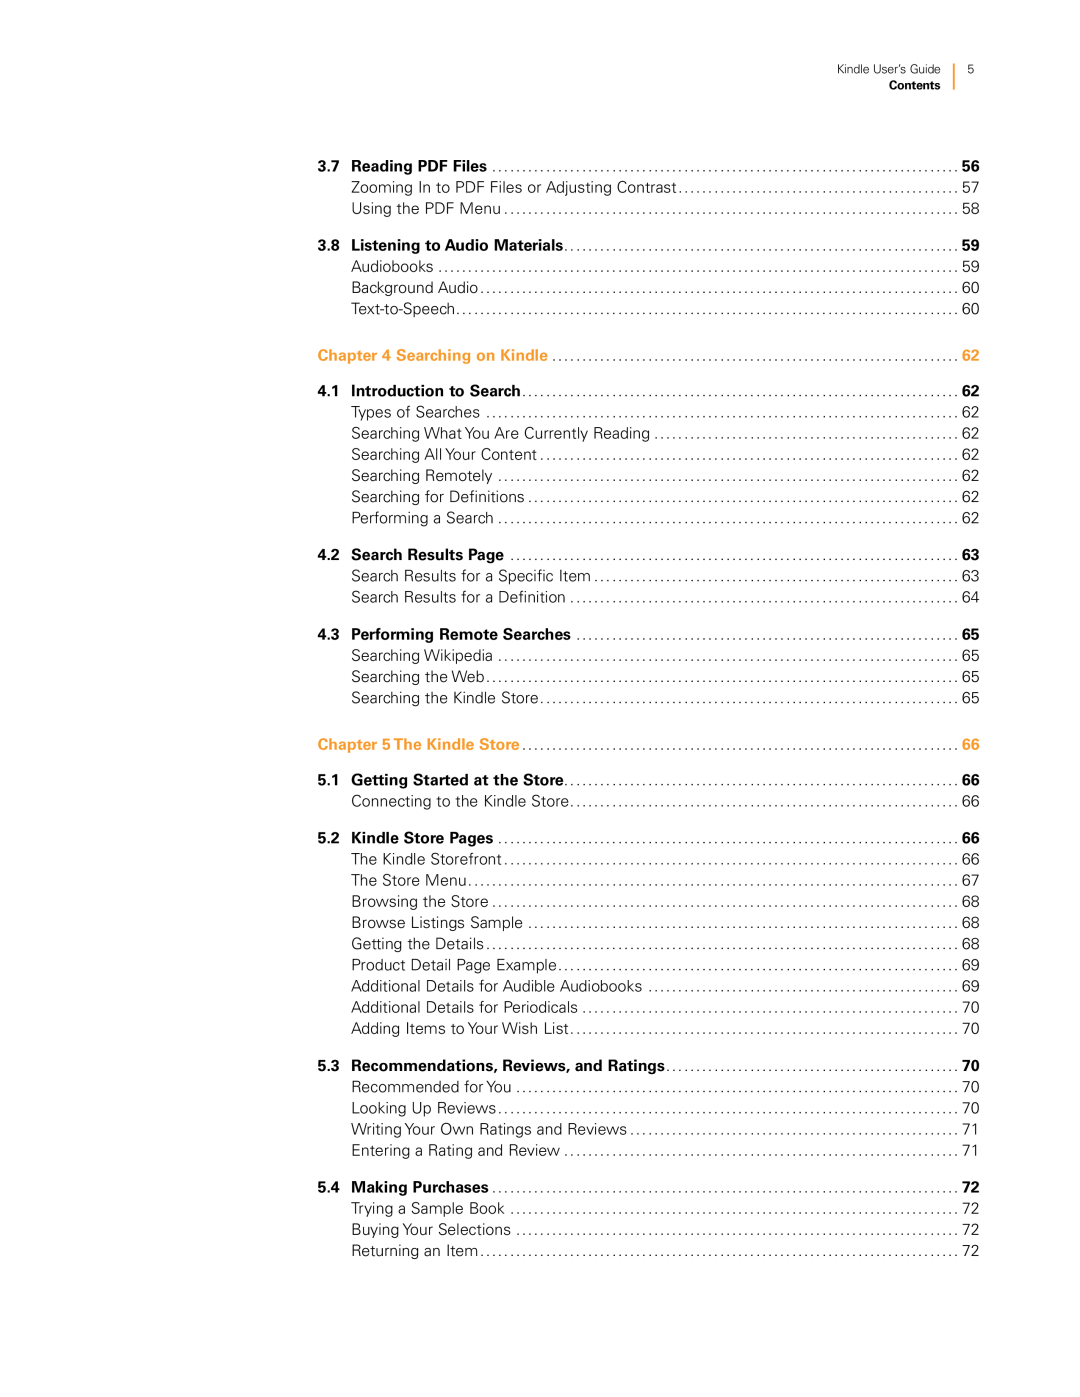 Amazon KNDKYBRD3G manual Reading PDF Files 